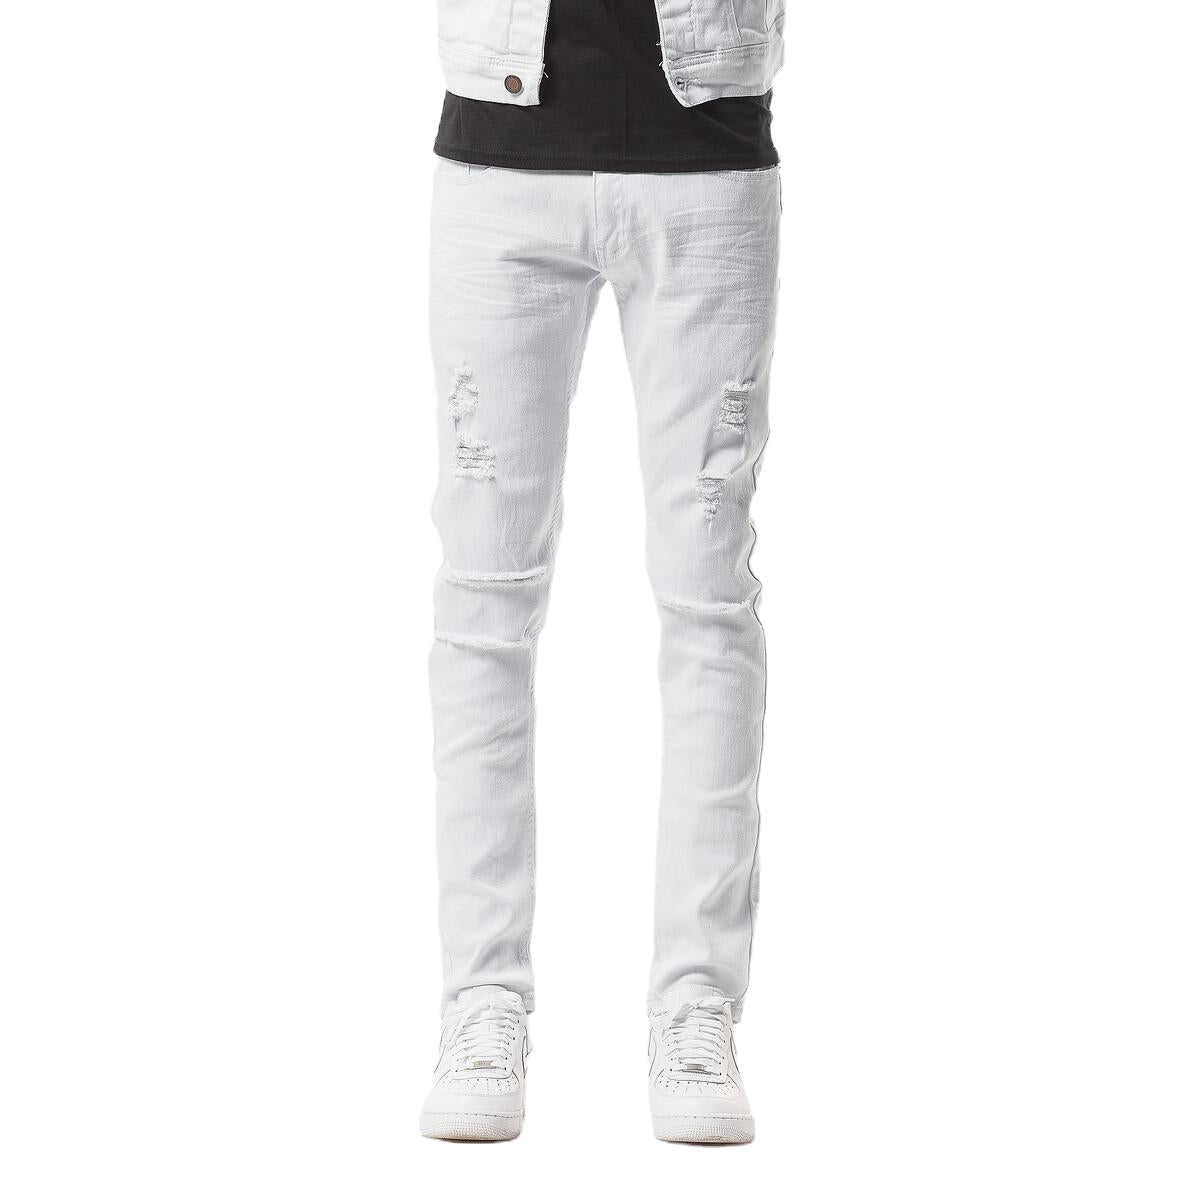 WhiteSkinny Jeans with Rips